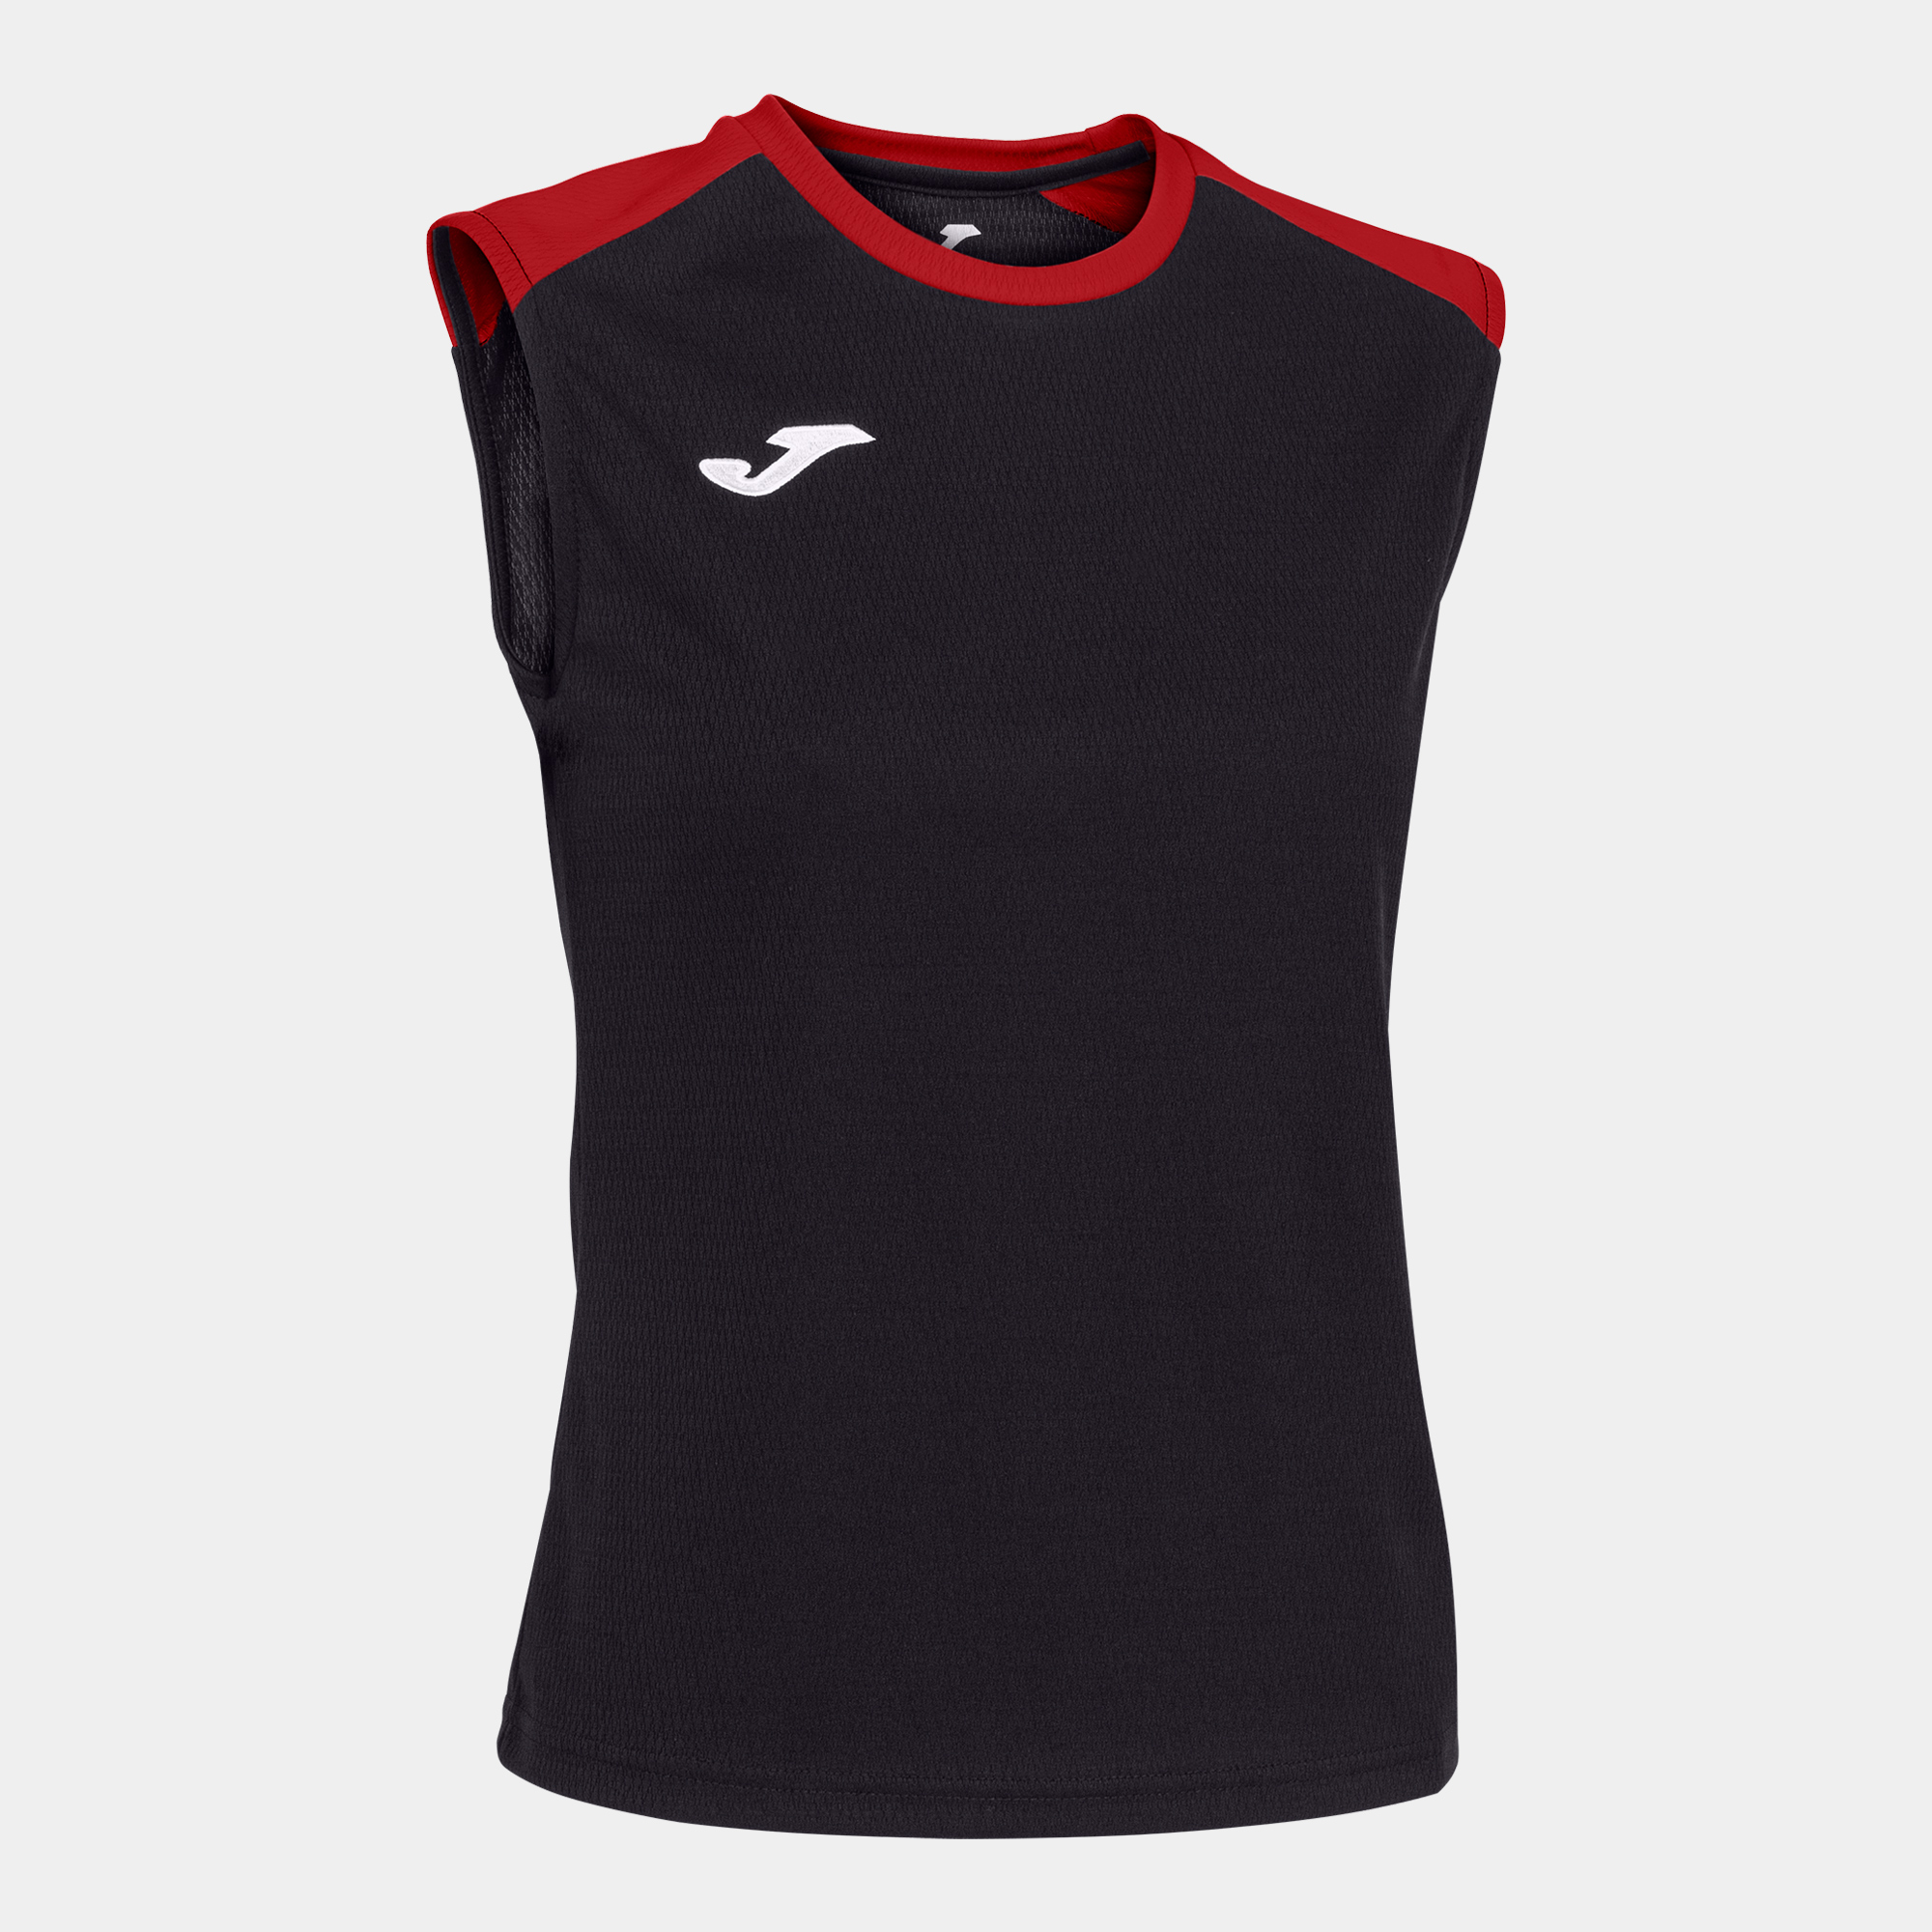 Camiseta Tirantes Joma Eco Championship Negro Rojo - negro-rojo - 